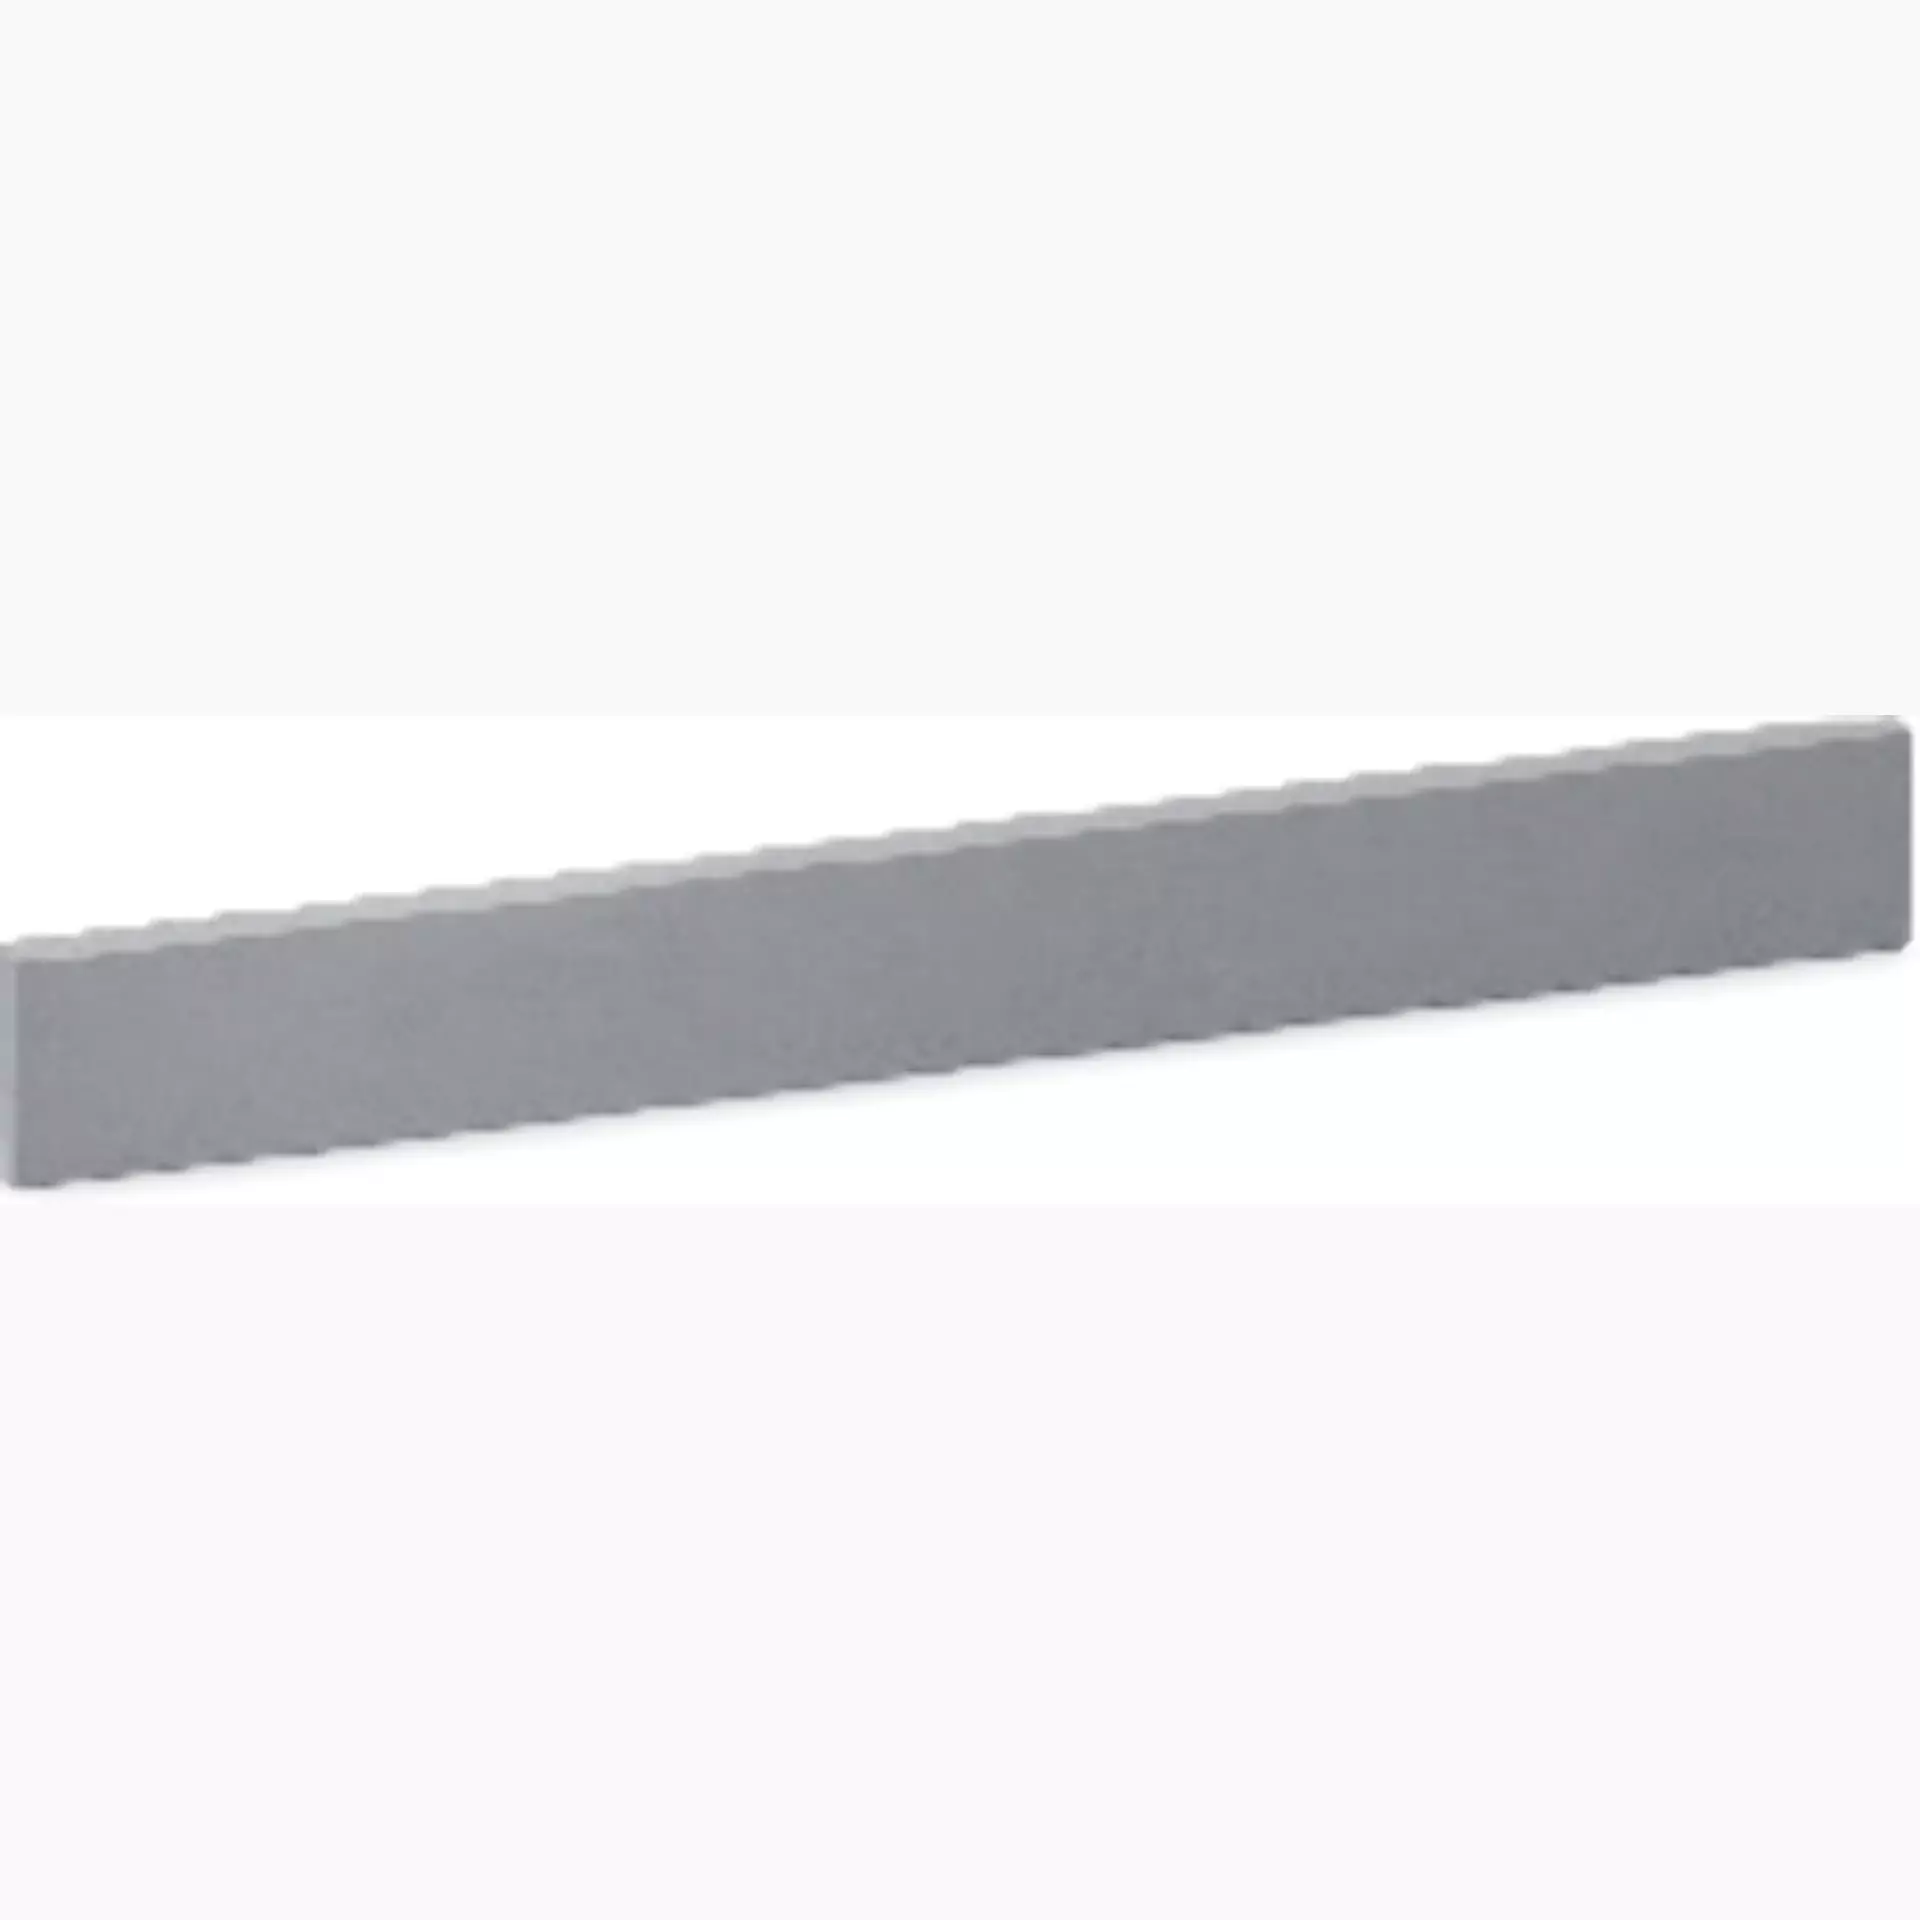 Sichenia Amboise Beige Soft Grip Skirting board 0192832 7x60cm rectified 10mm